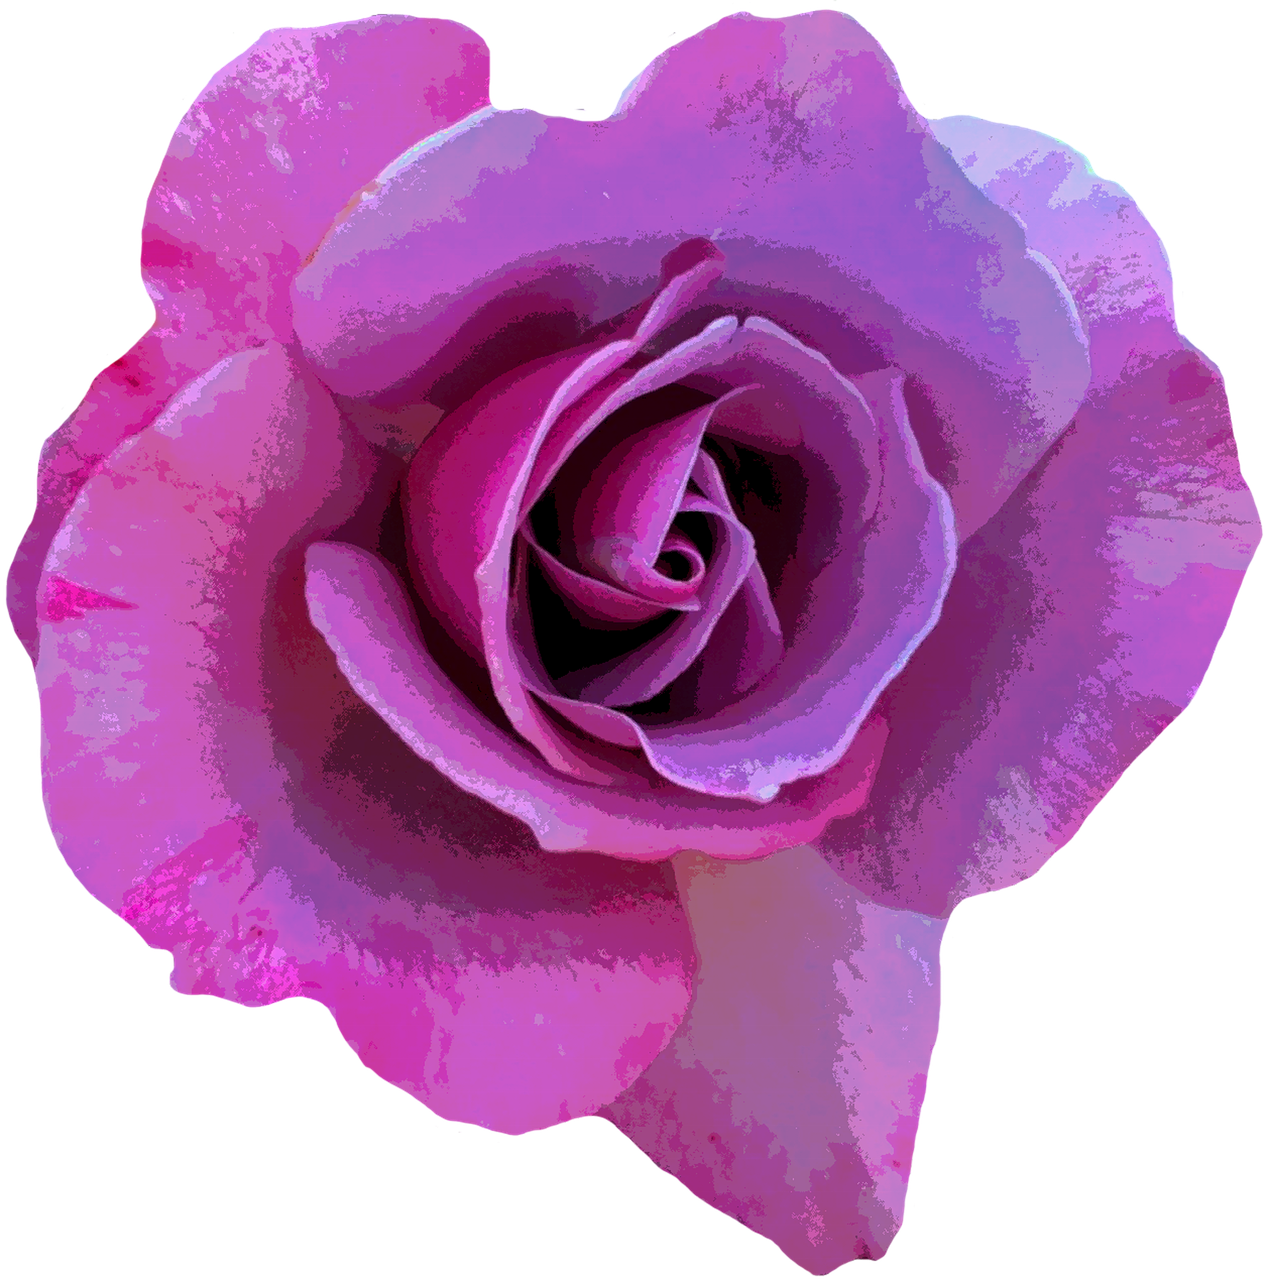 rose purple blossom free photo